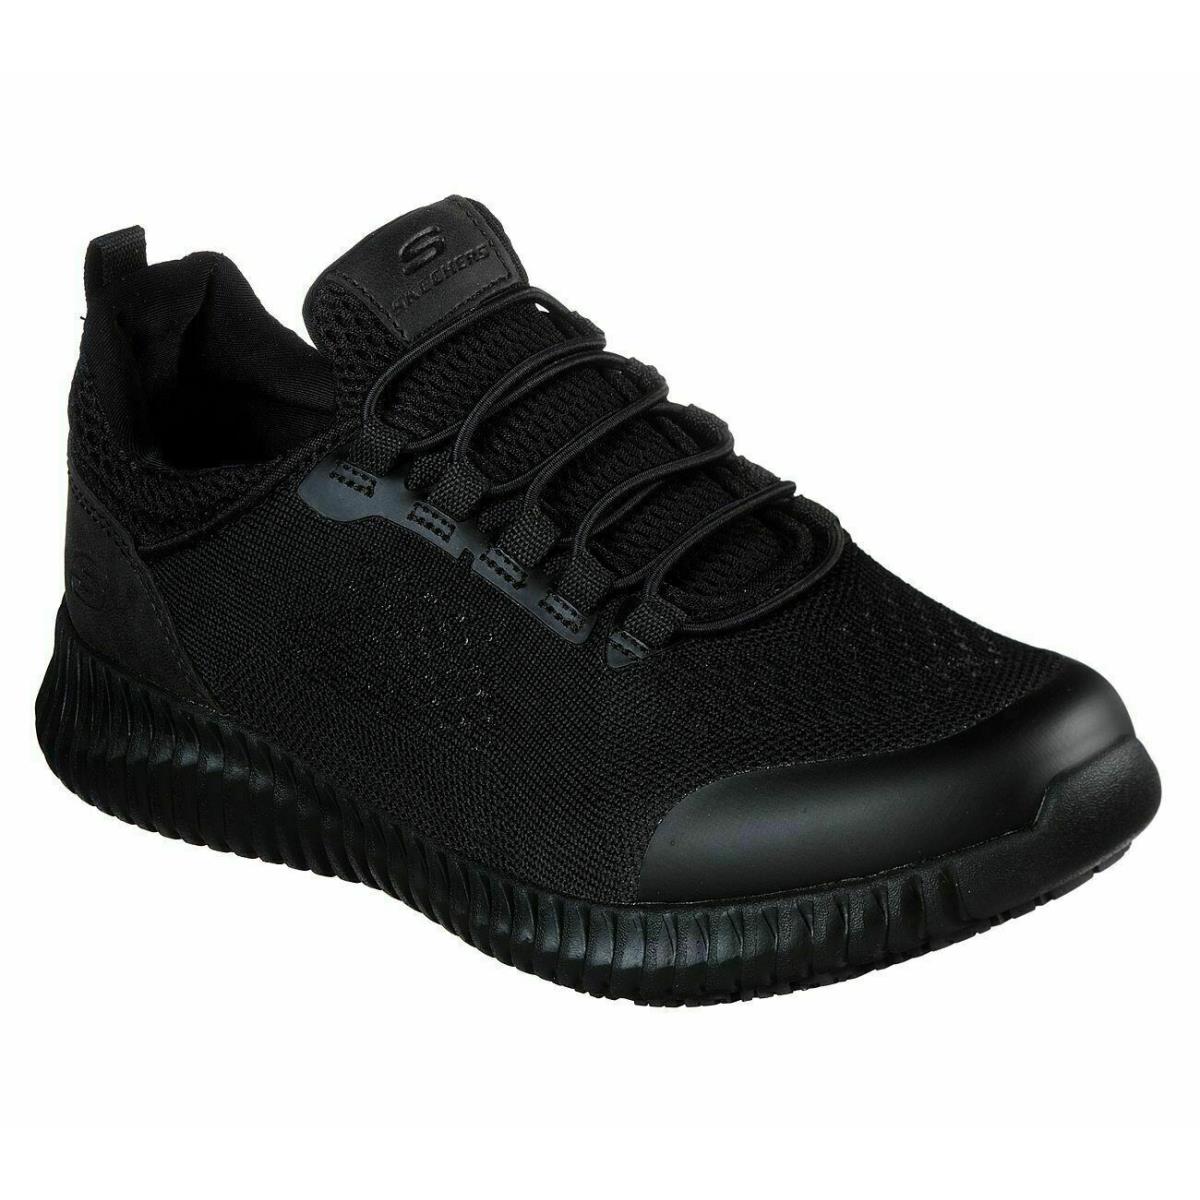 Skechers Black Shoes Women Work Memory Foam Slipon Slip Resistant 77260 Blk - Black